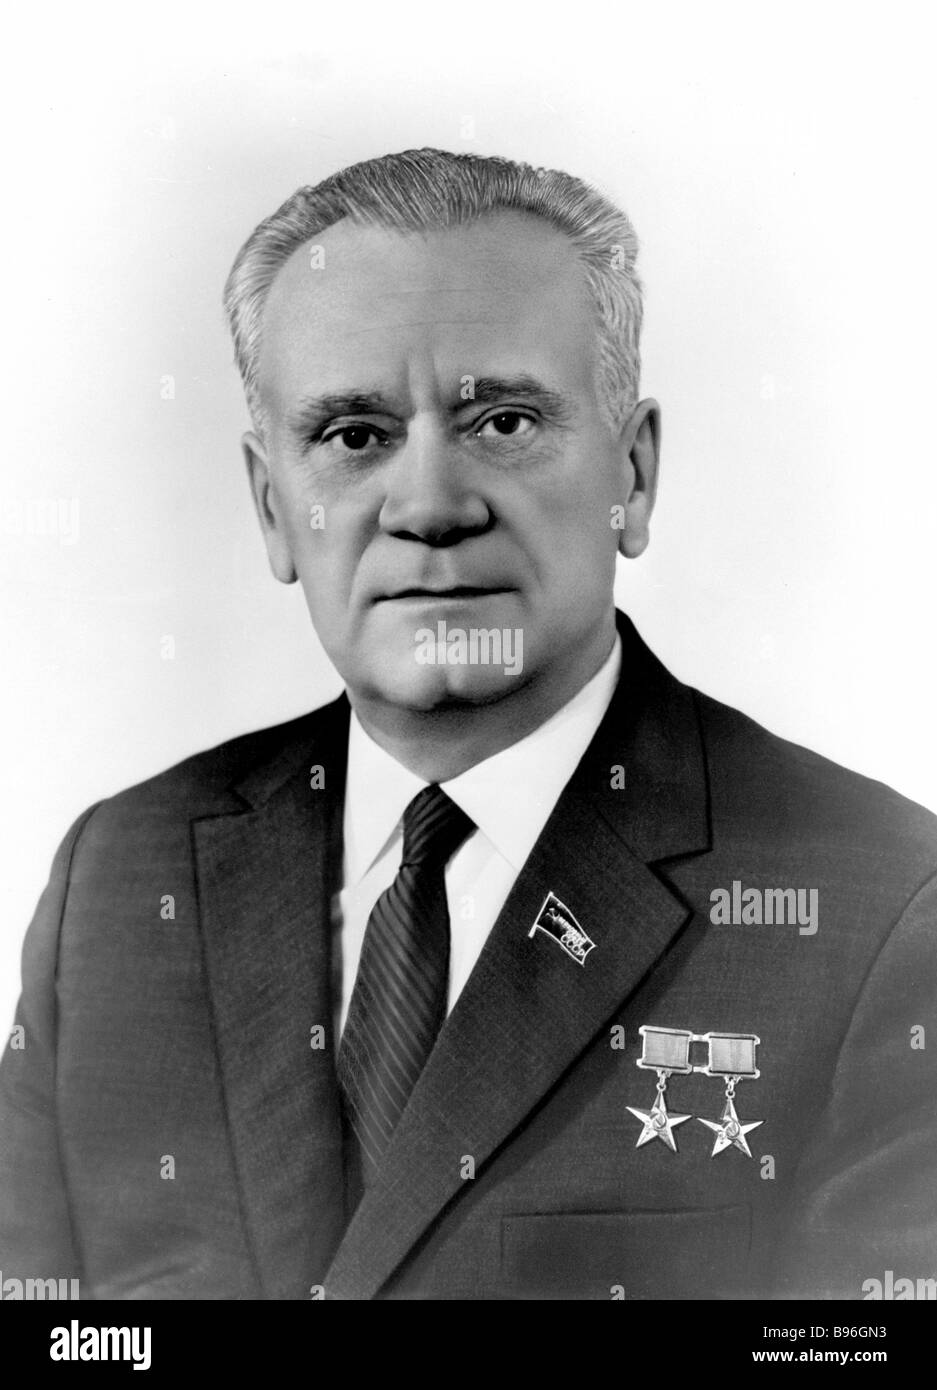 Министр советских времен